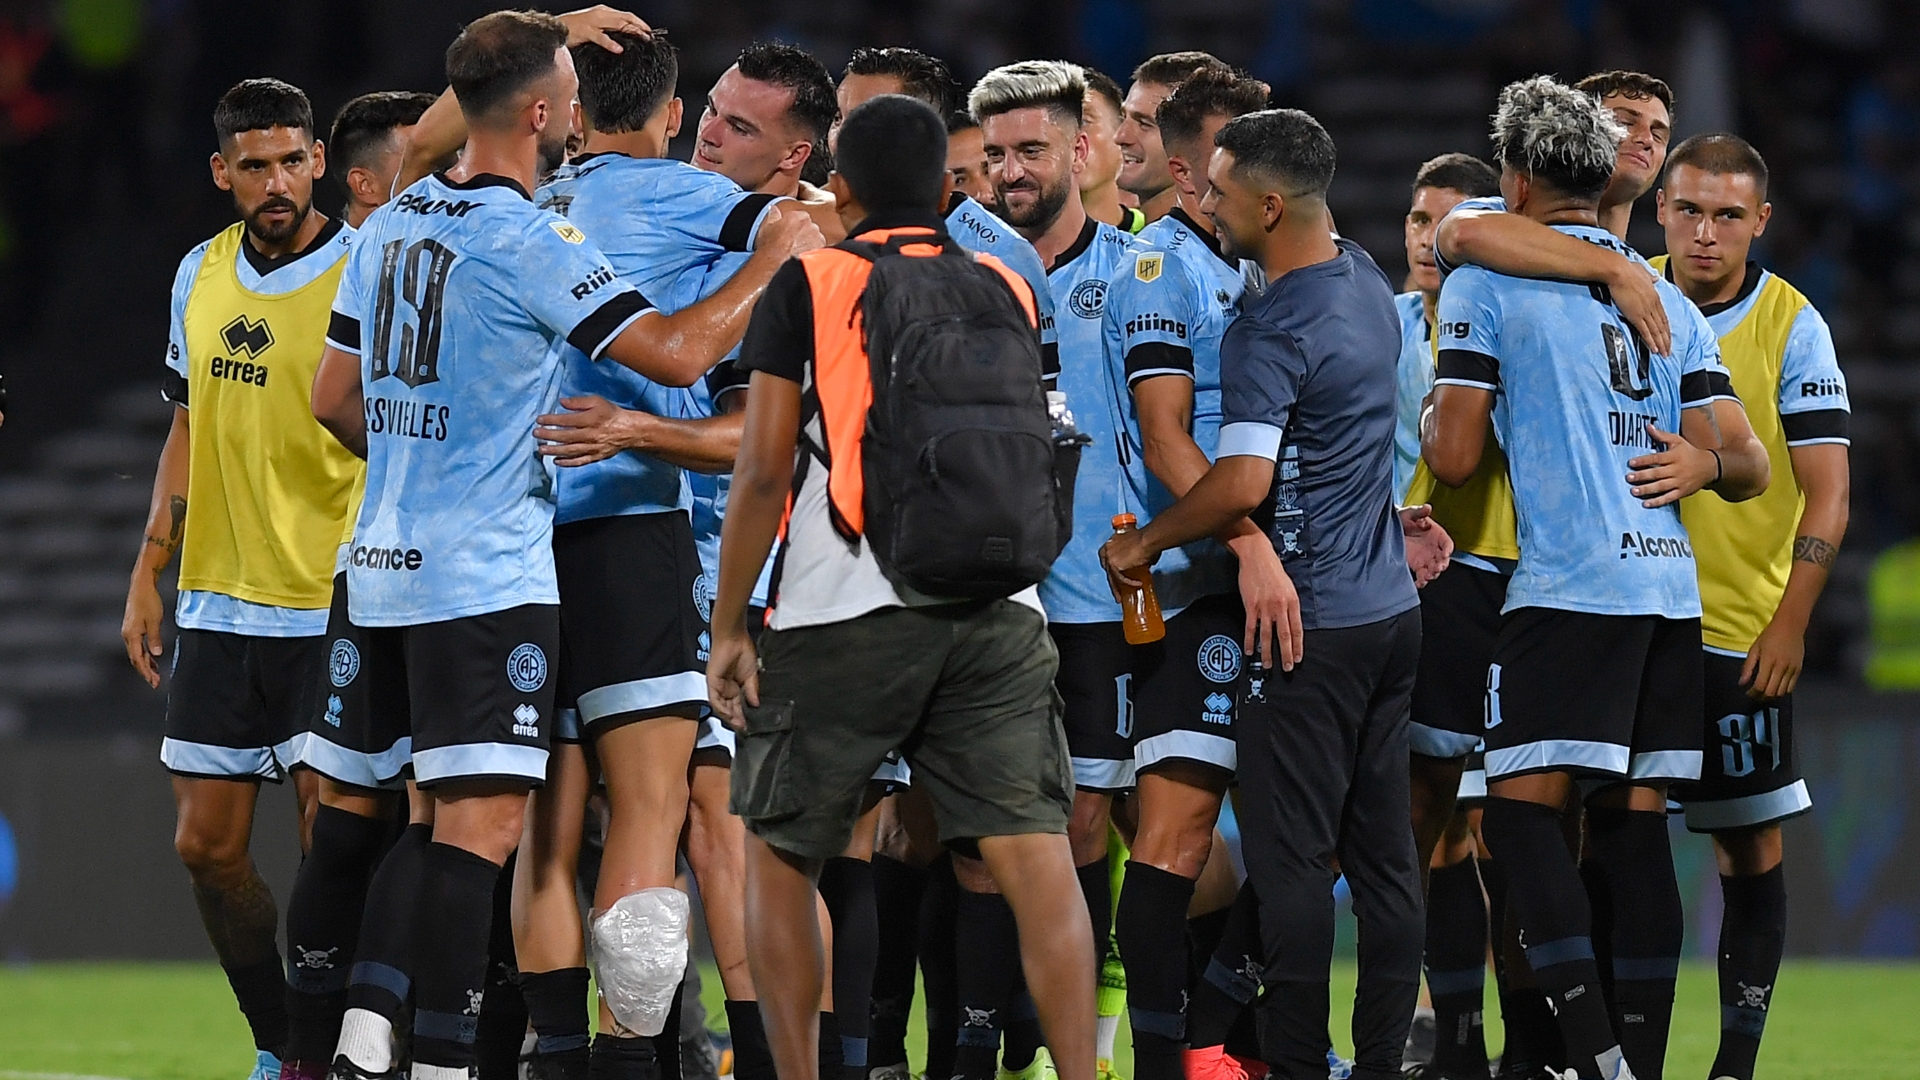 Boca Juniors vs Belgrano H2H stats - SoccerPunter